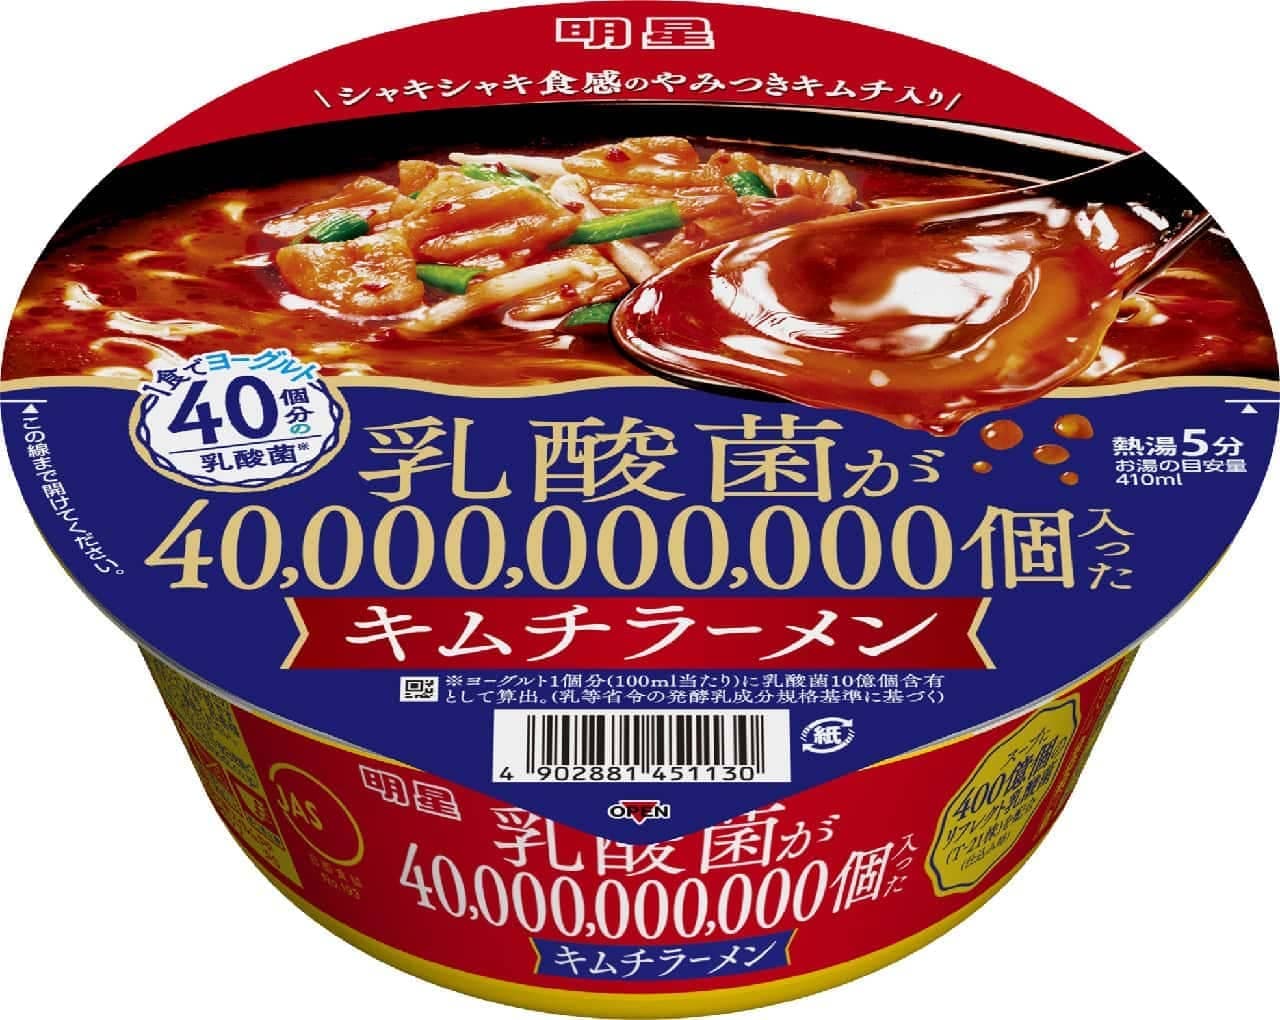 Kimchi ramen containing 40,000,000,000 Myojo lactic acid bacteria